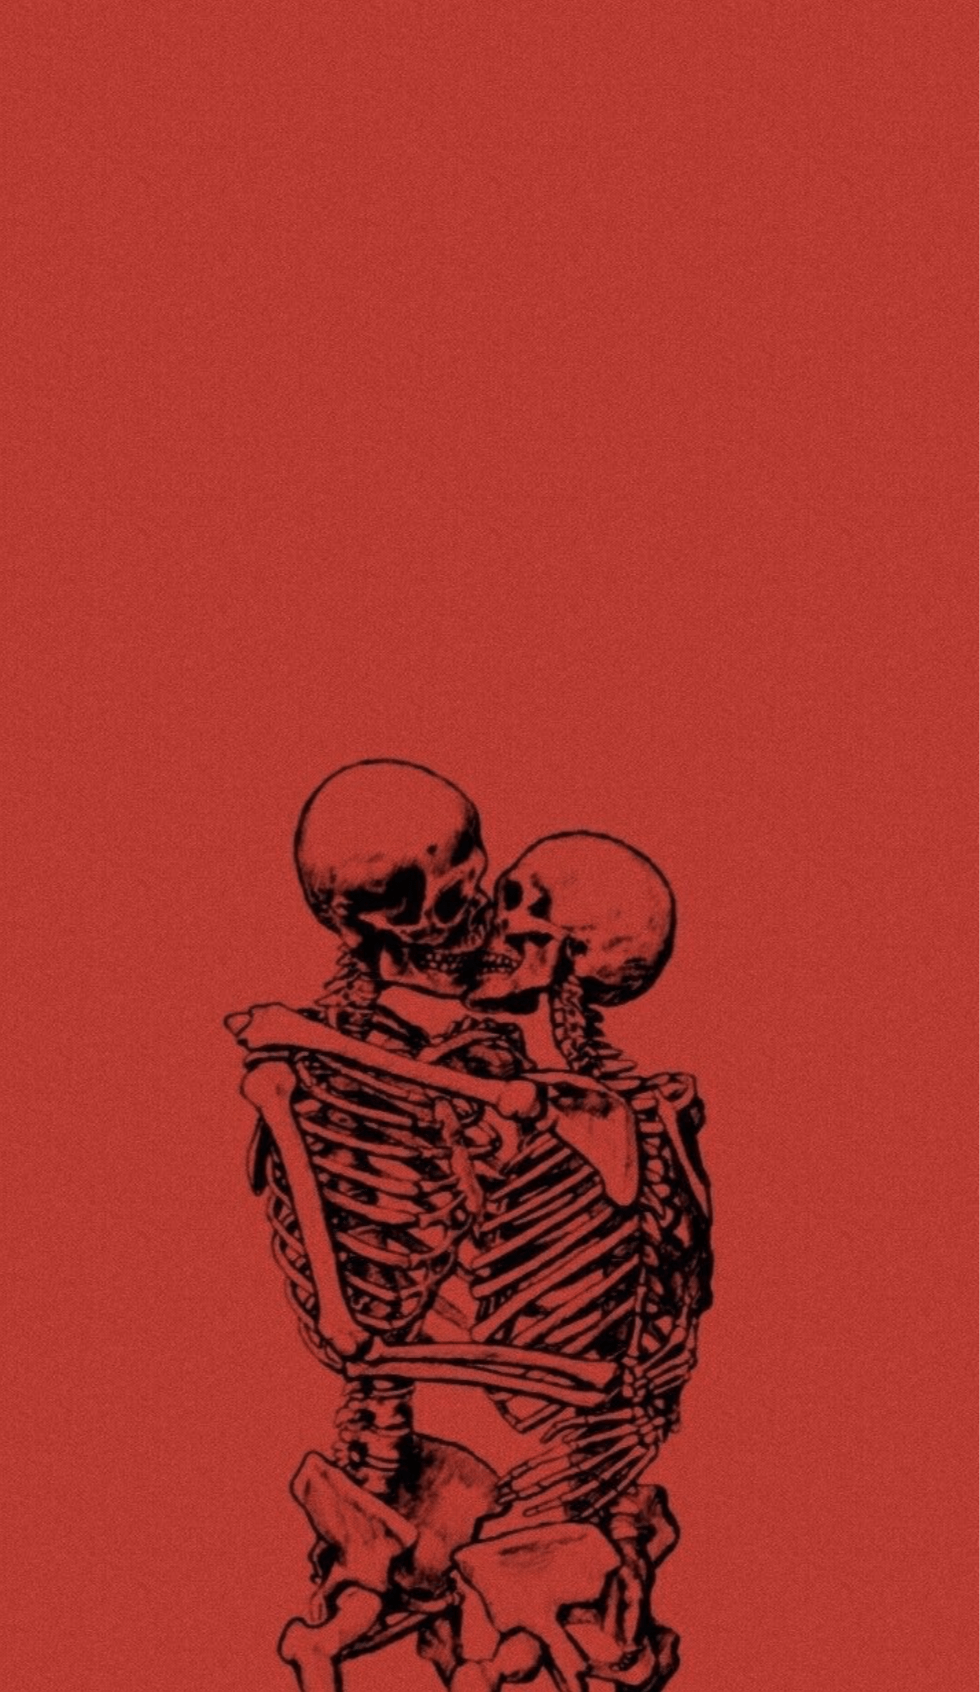 A poster of two skeletons kissing - Skull